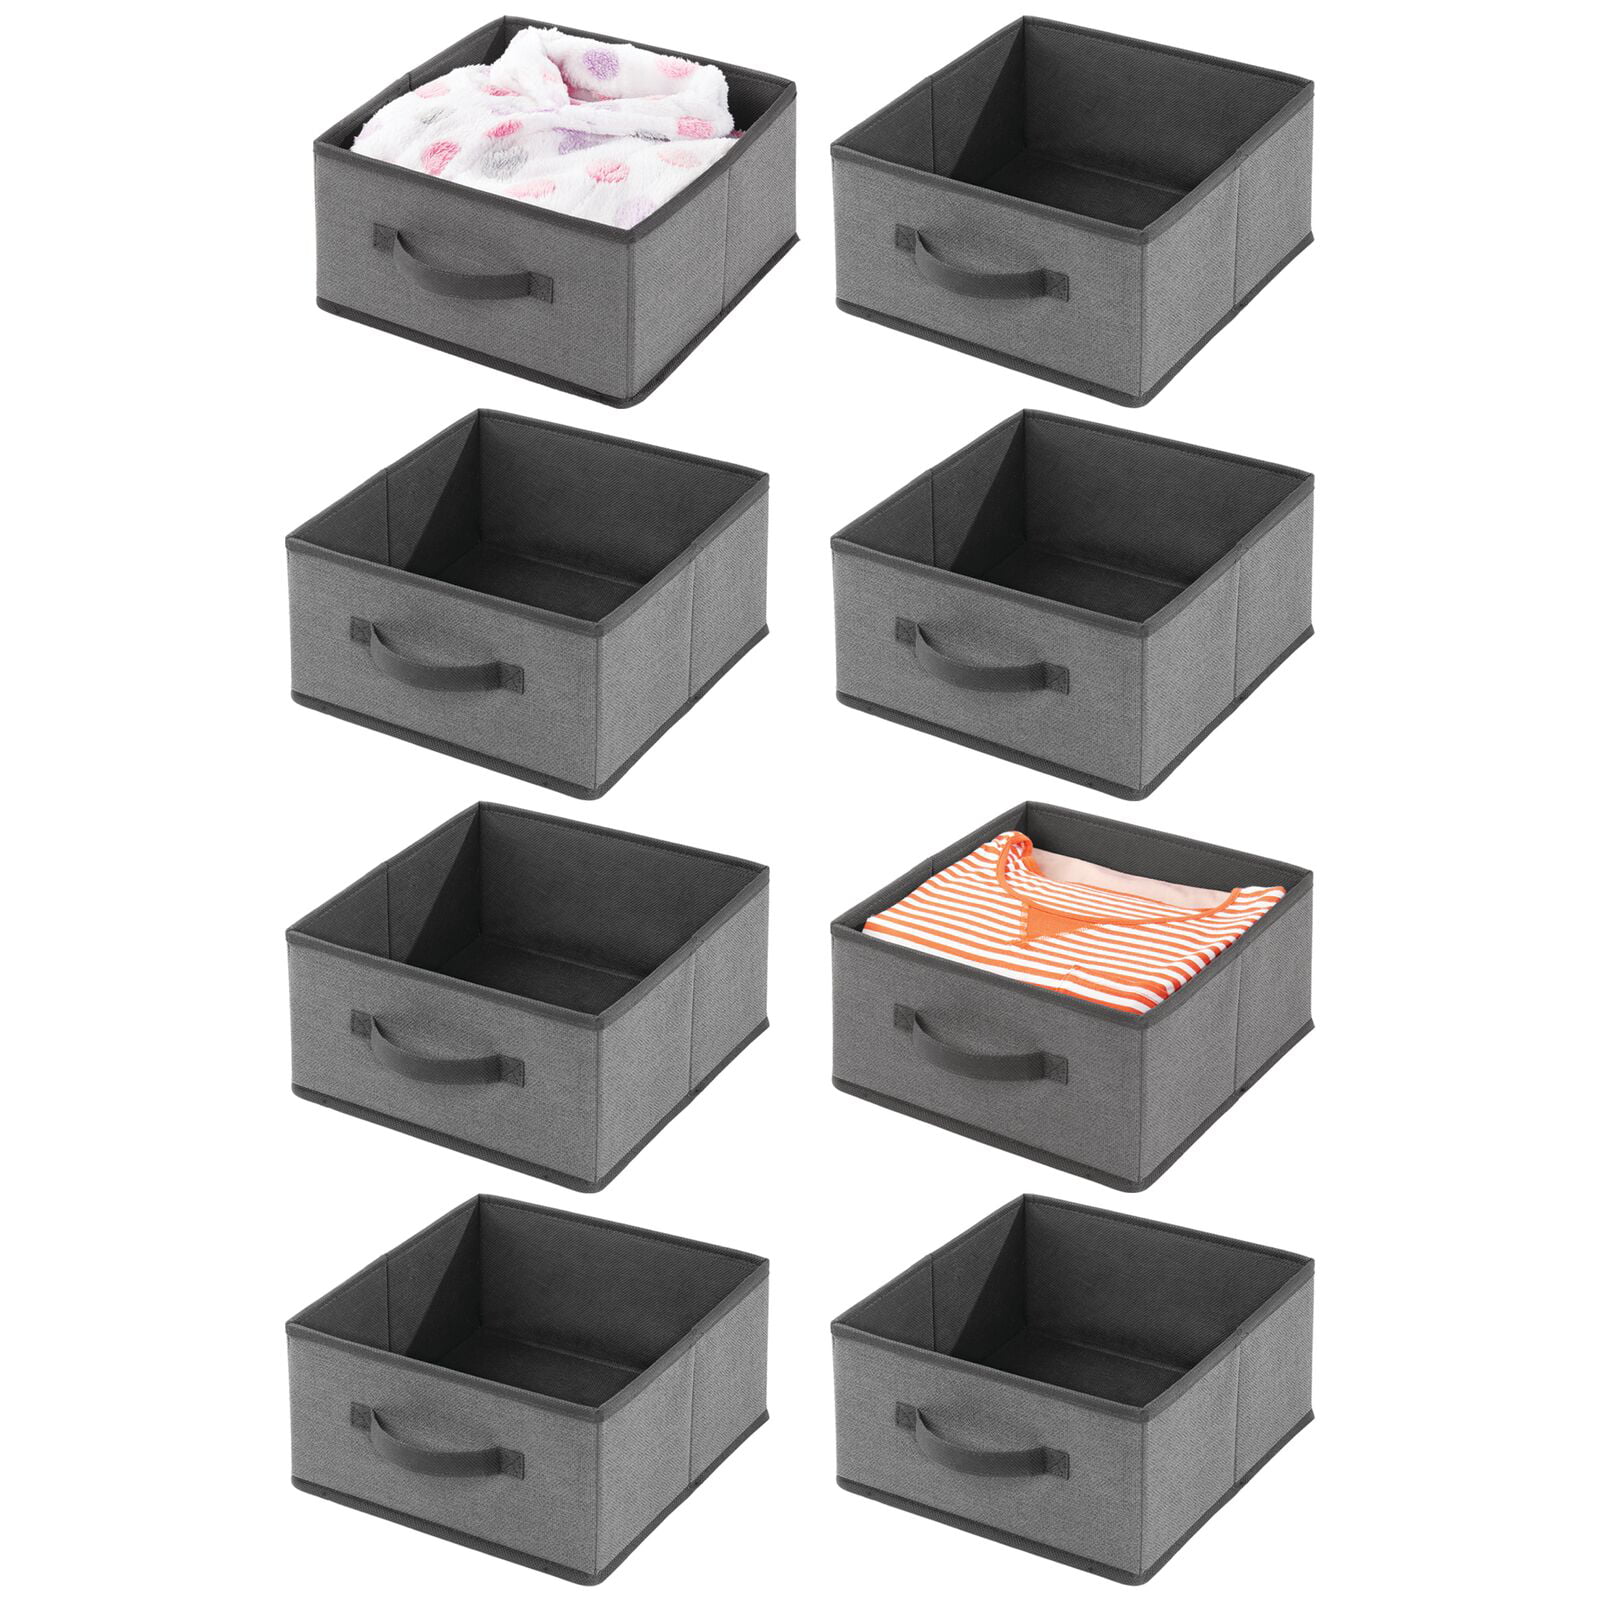 8 Pack Gray/Black mDesign Fabric Modular Closet Organizer Box for Cube Units 